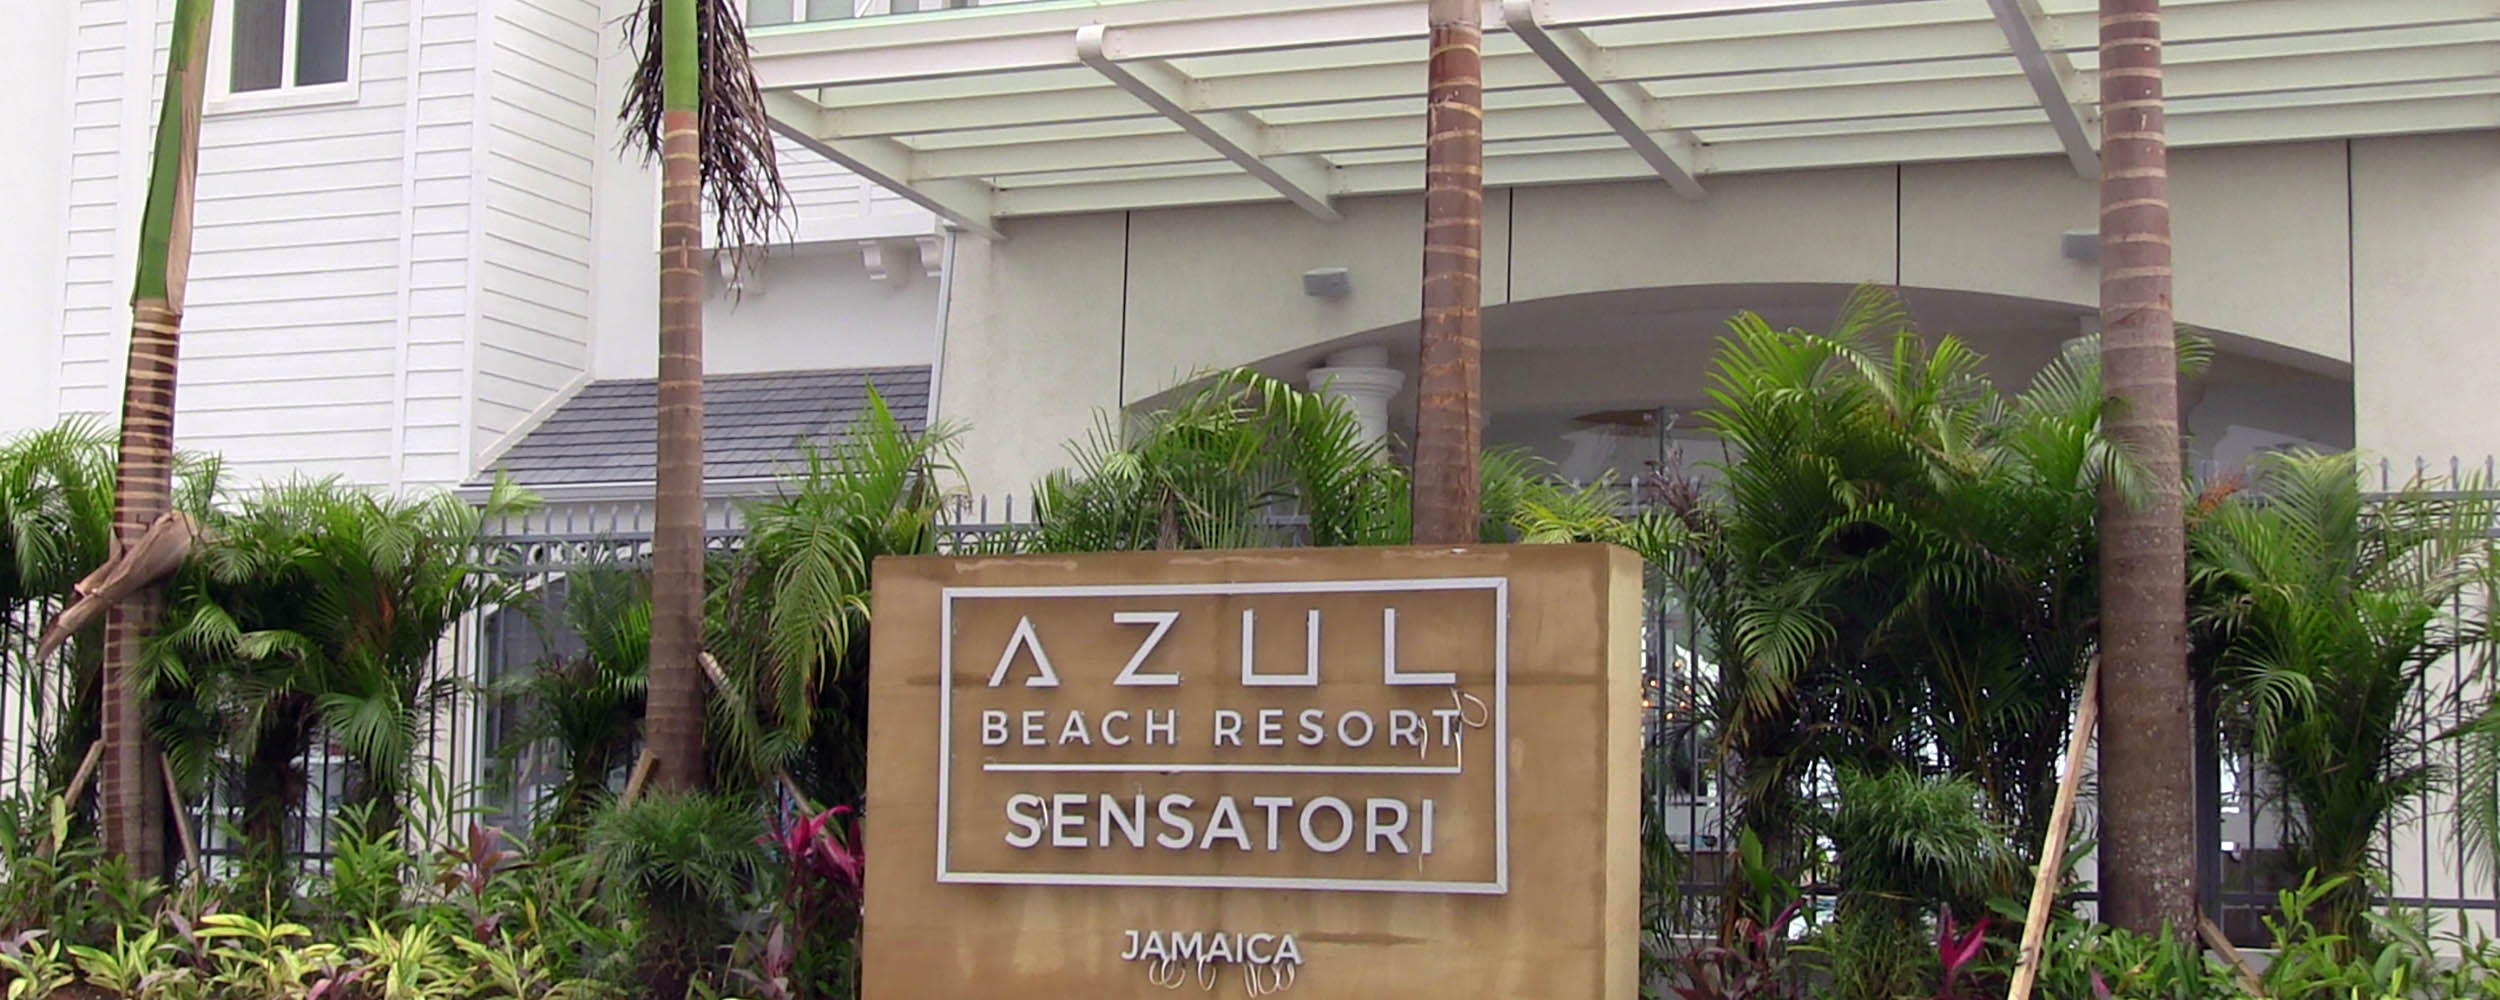 AZUL Beach Resort Sensatori - Negril Jamaica